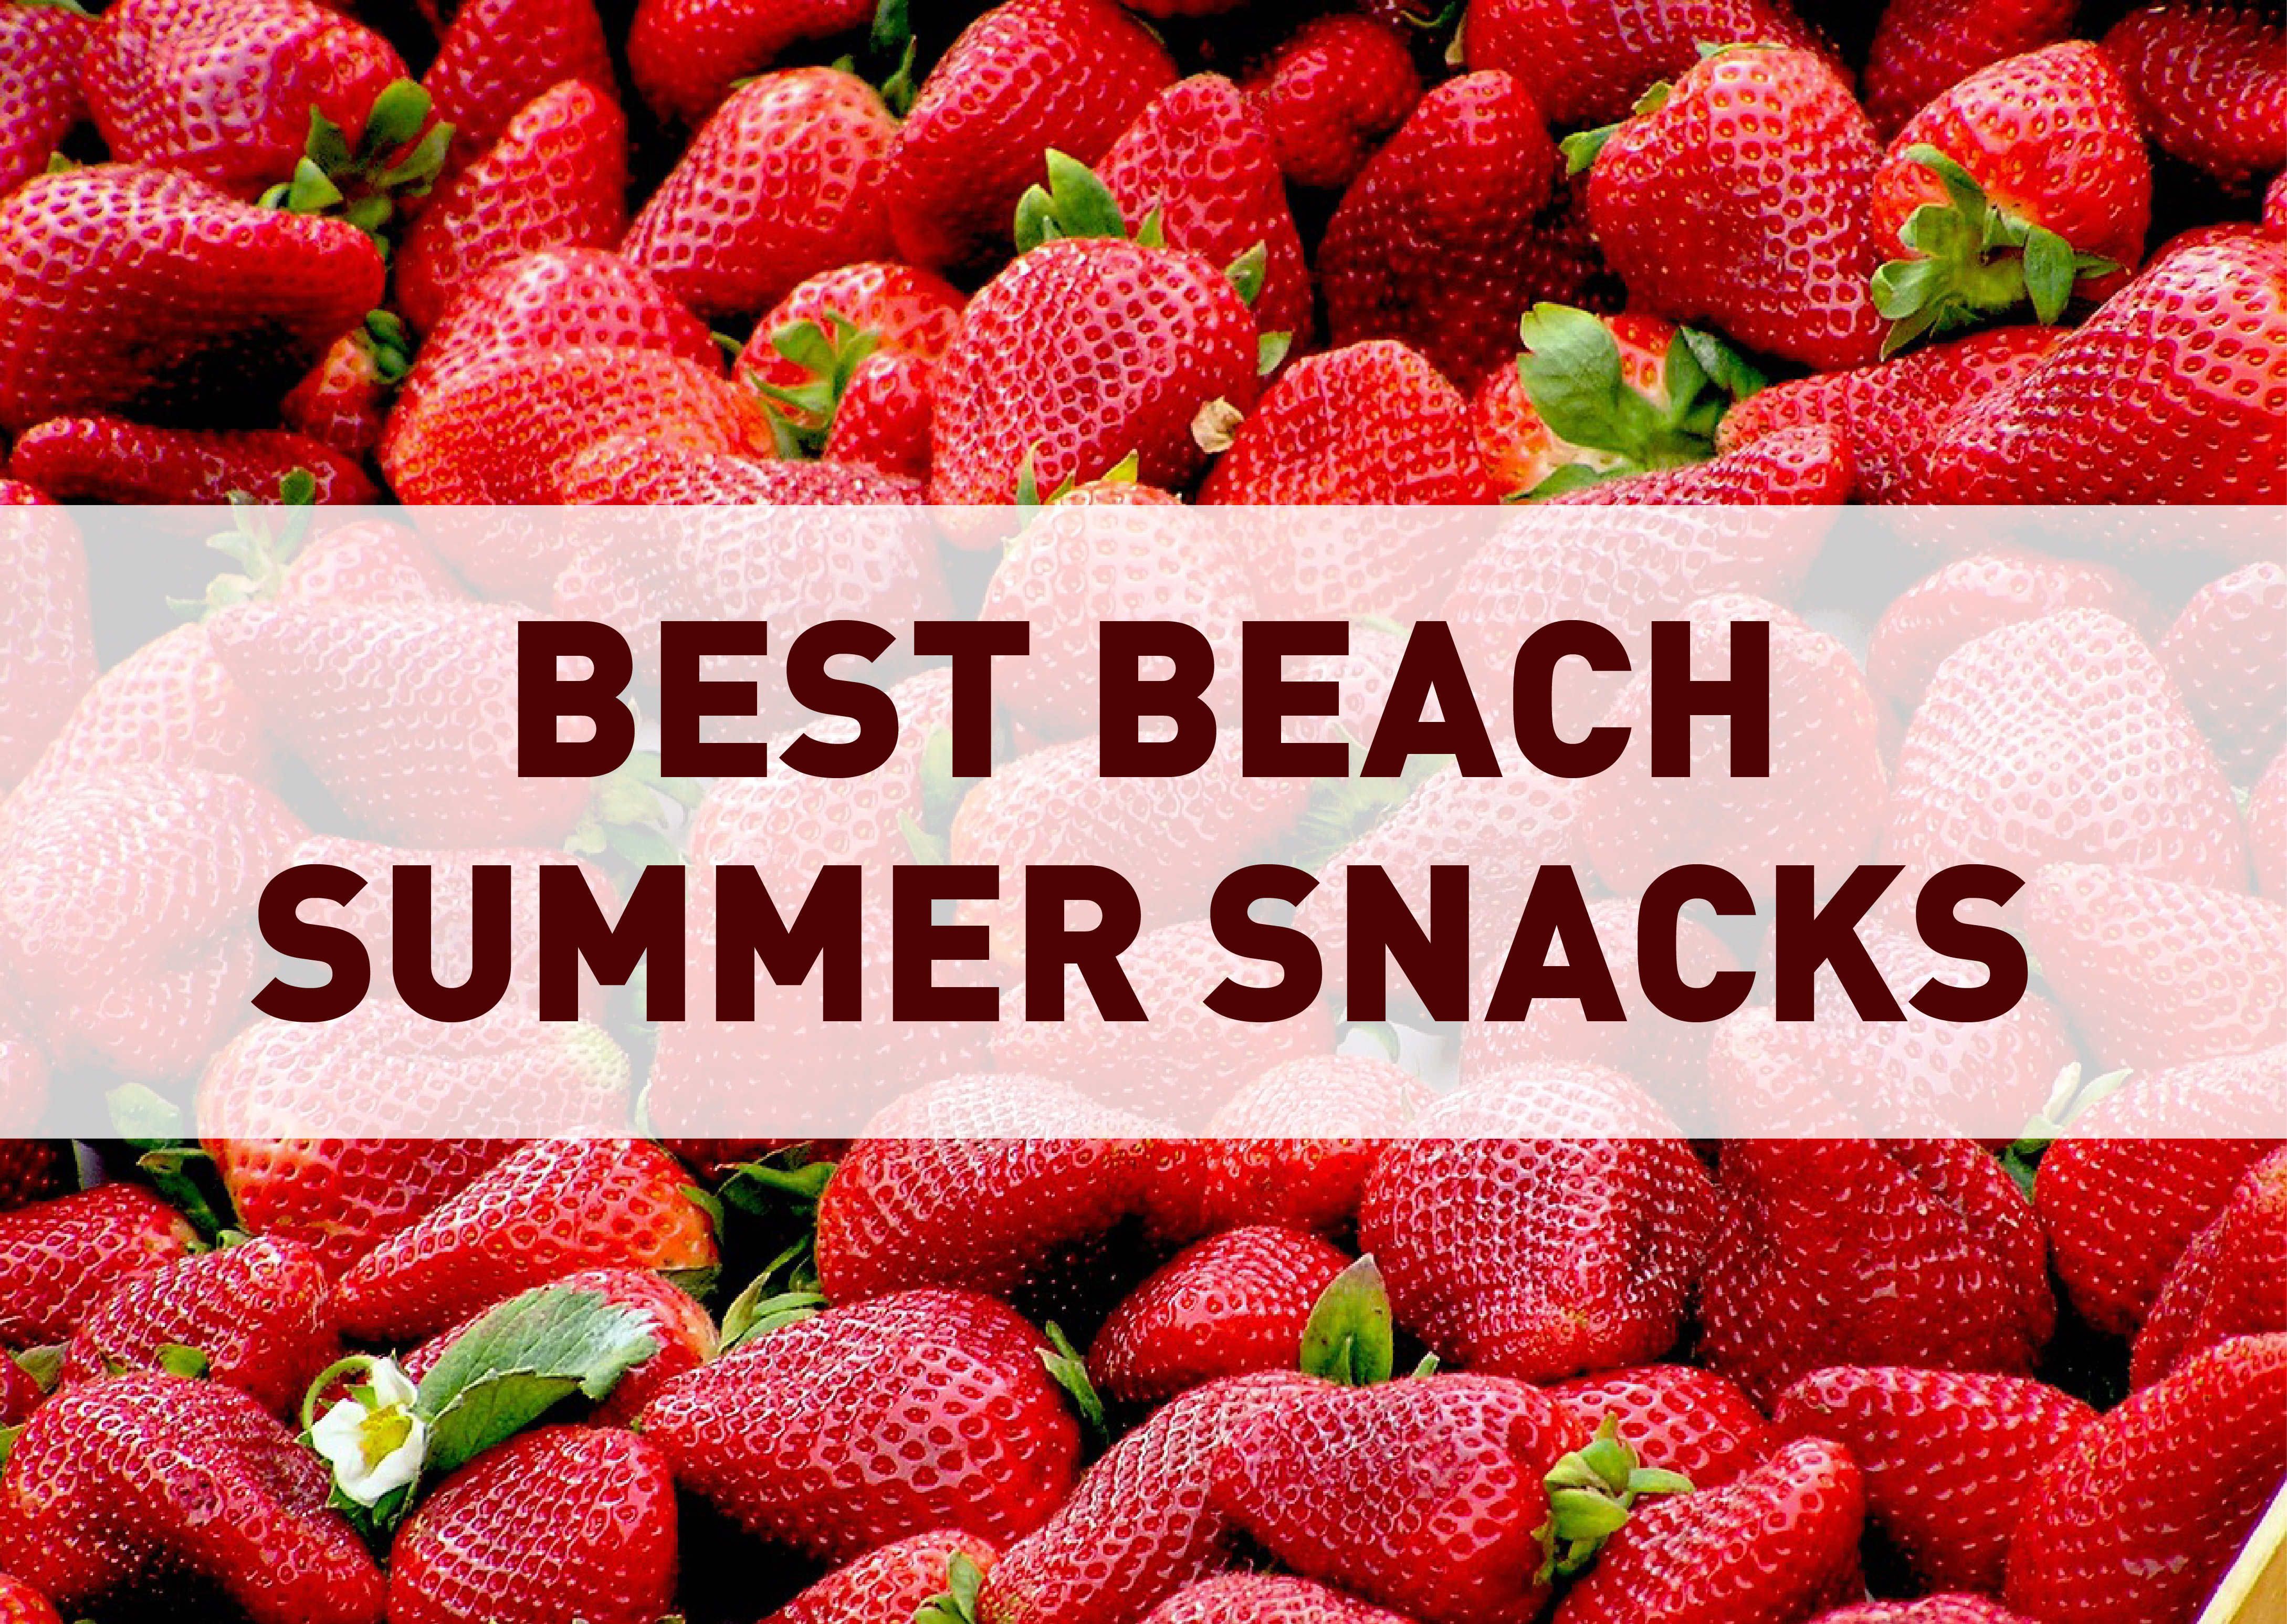 Best Beach Summer Snacks